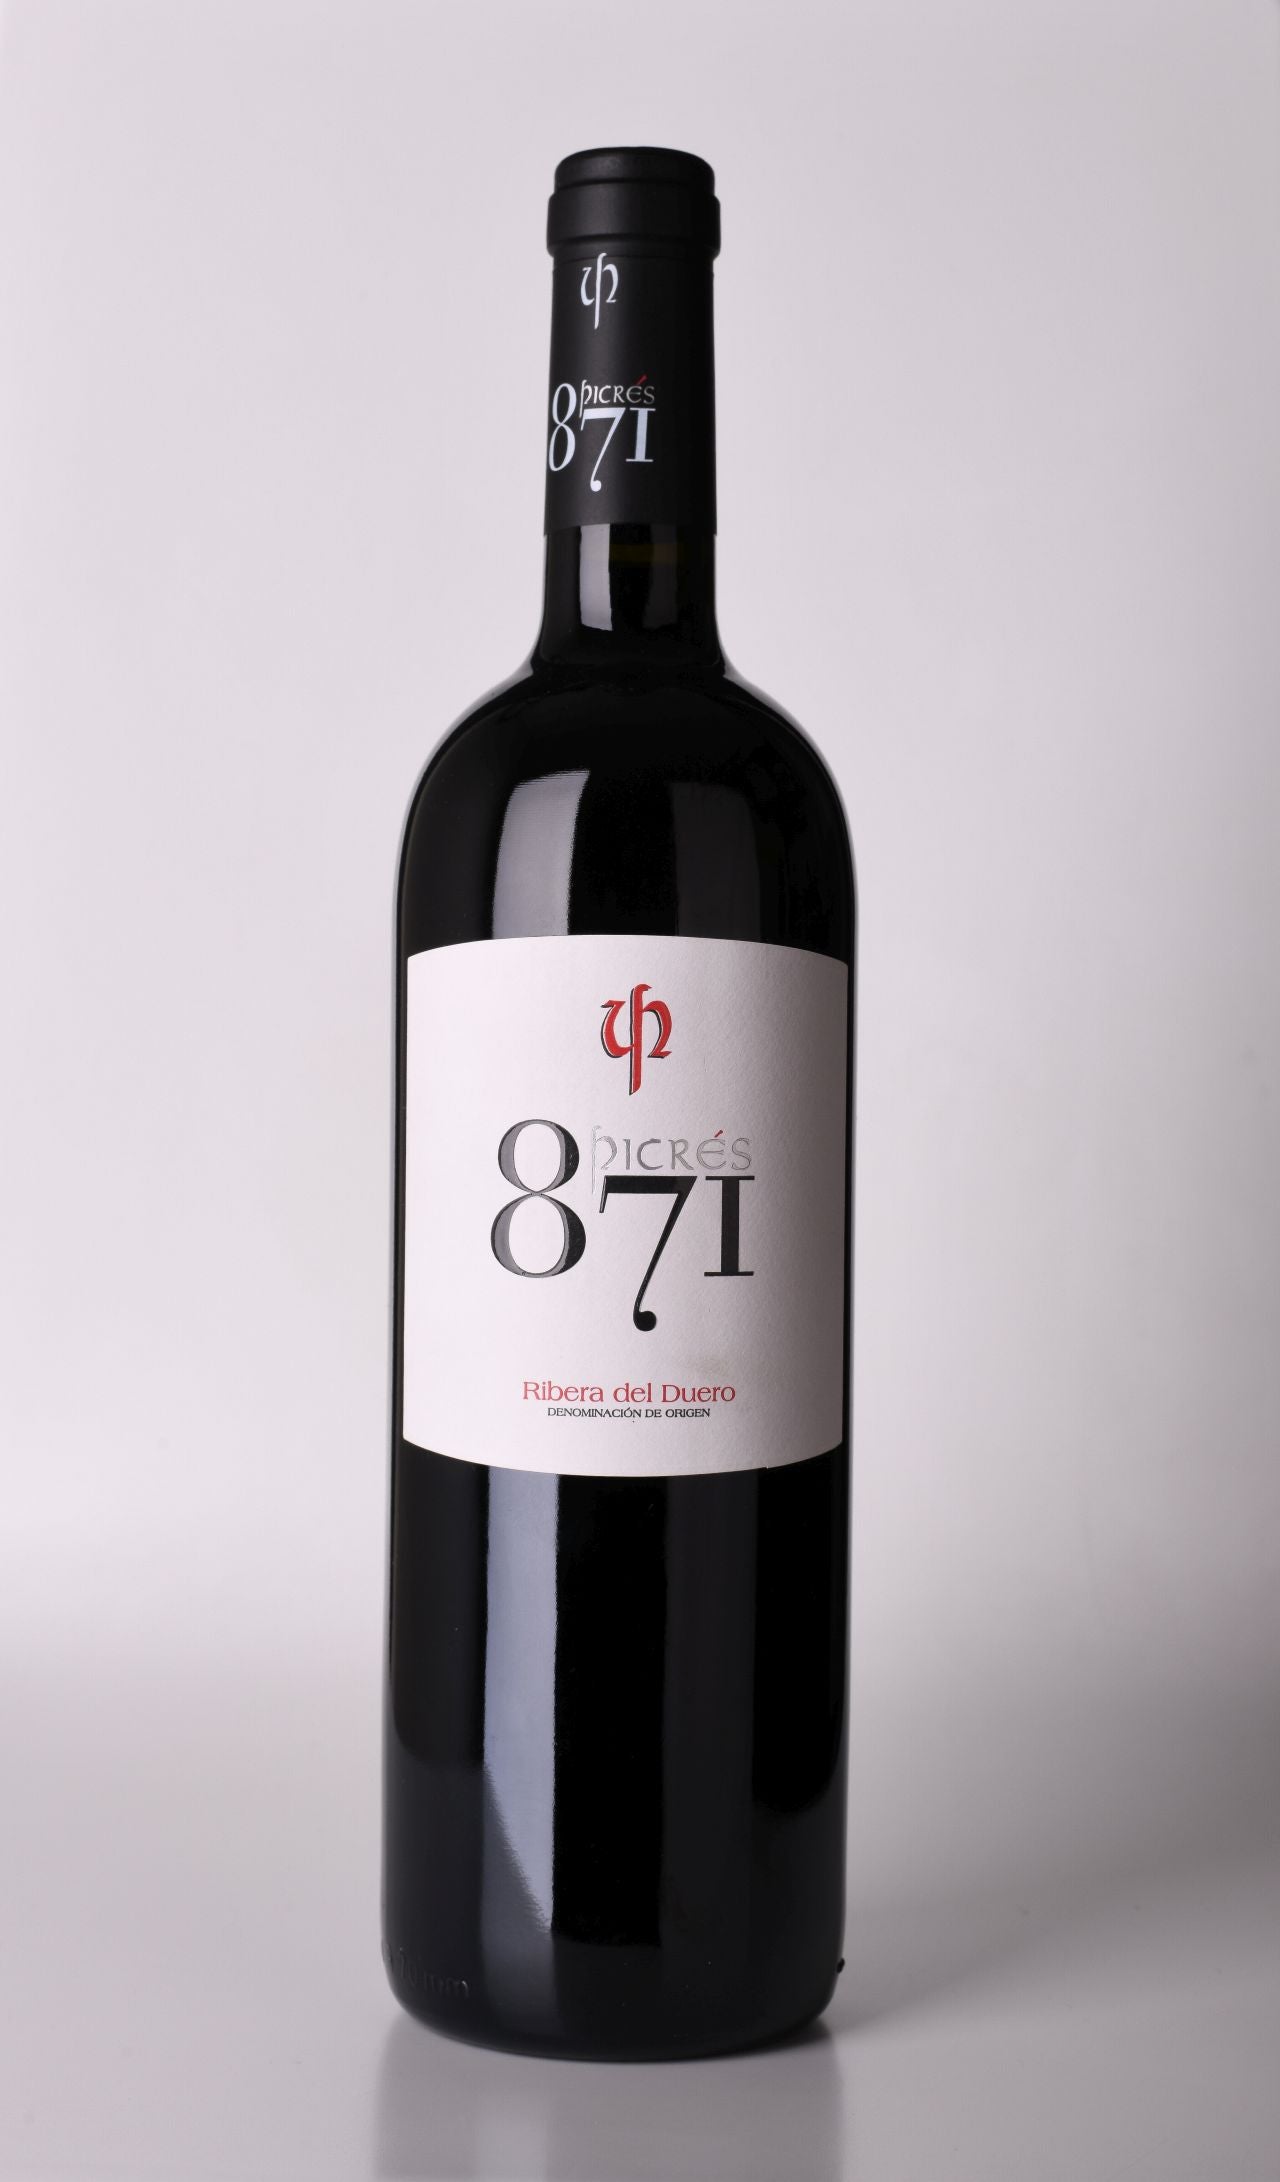 Ribera del Duero | Picres 871 2009 | Spanischer Rotwein – Vino Español